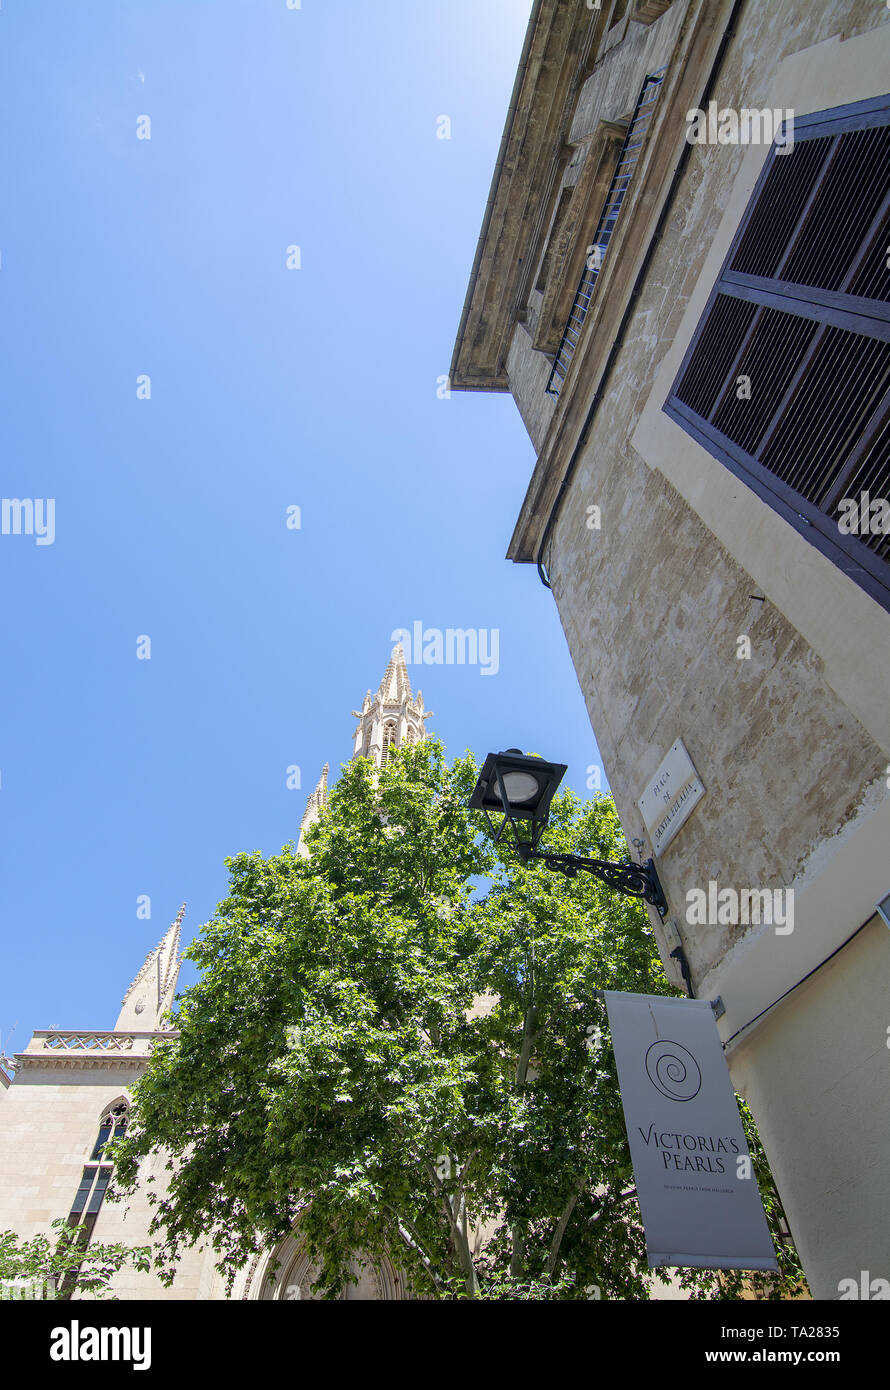 PALMA, MALLORCA, SPAIN - MAY 20, 2019: Victorias Pearls sign and Basilica Sant Francesc towering behind tree on a sunny day on May 20, 2019 in Palma,  Stock Photo